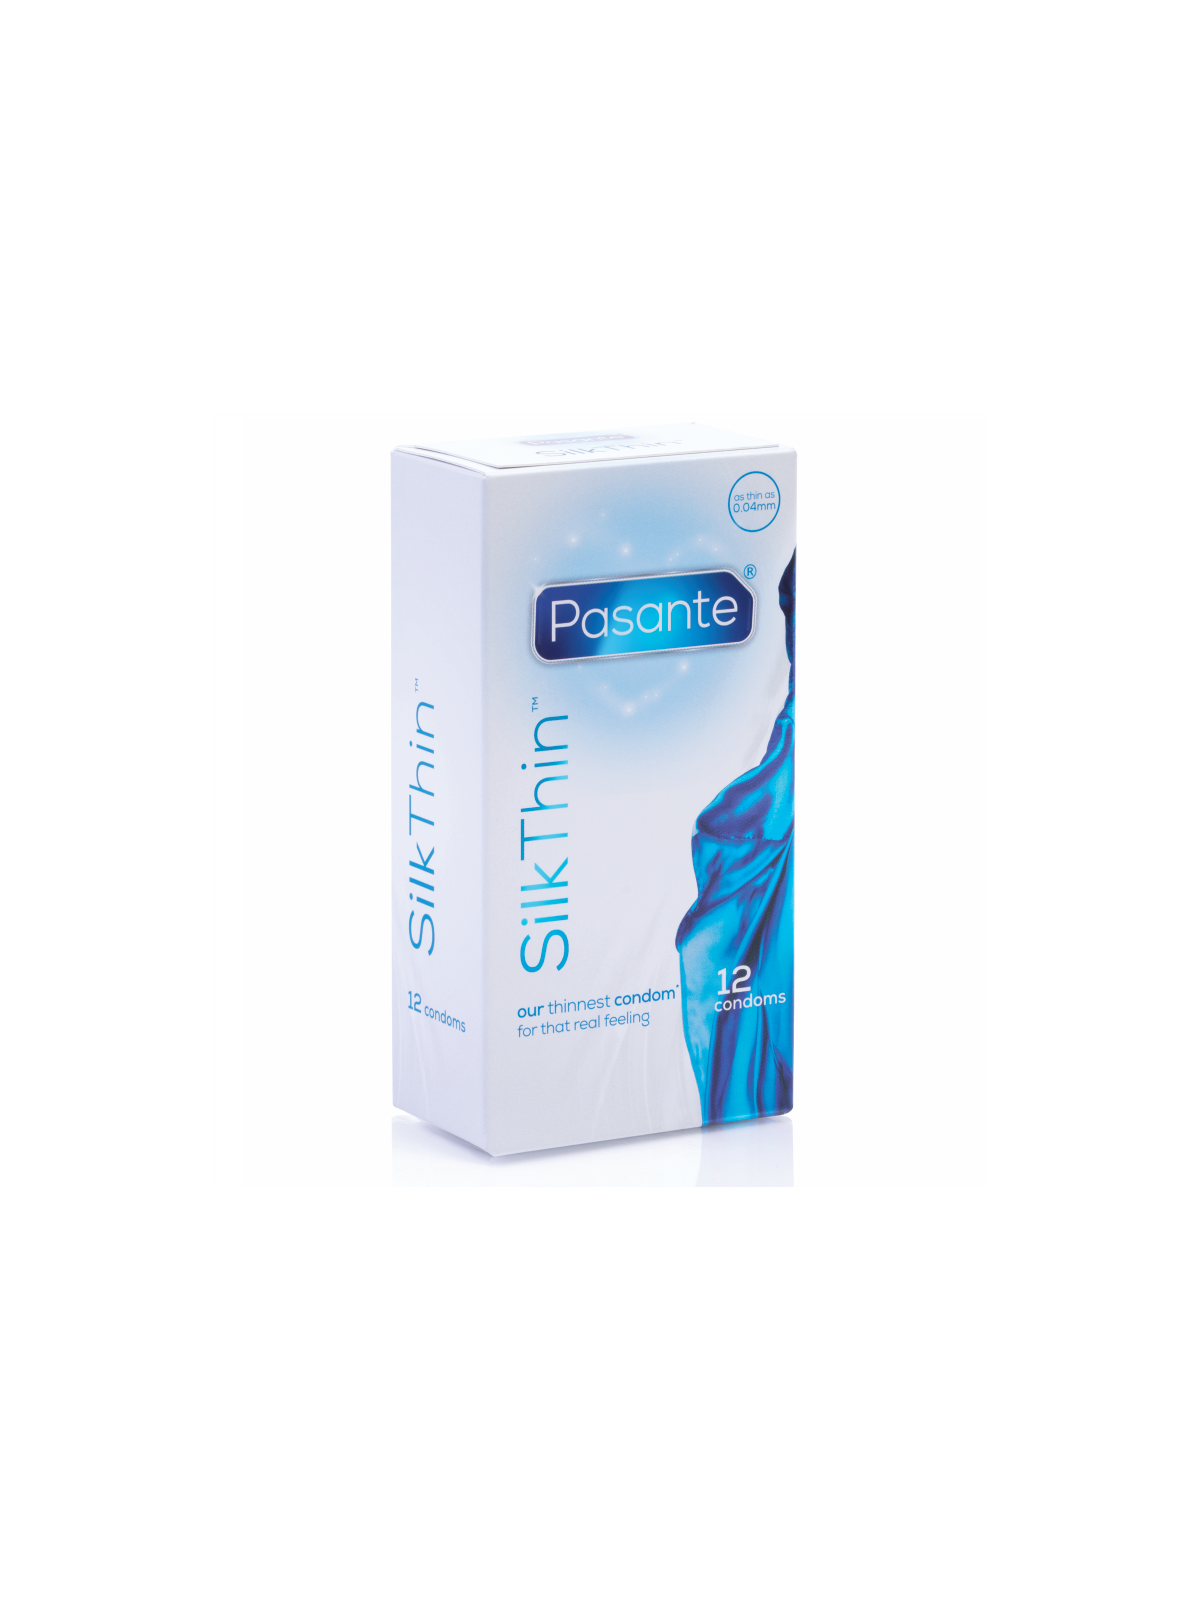 Pasante Silk Más Fino 12 Unidades - Comprar Condones extra finos Pasante - Preservativos extra finos (1)